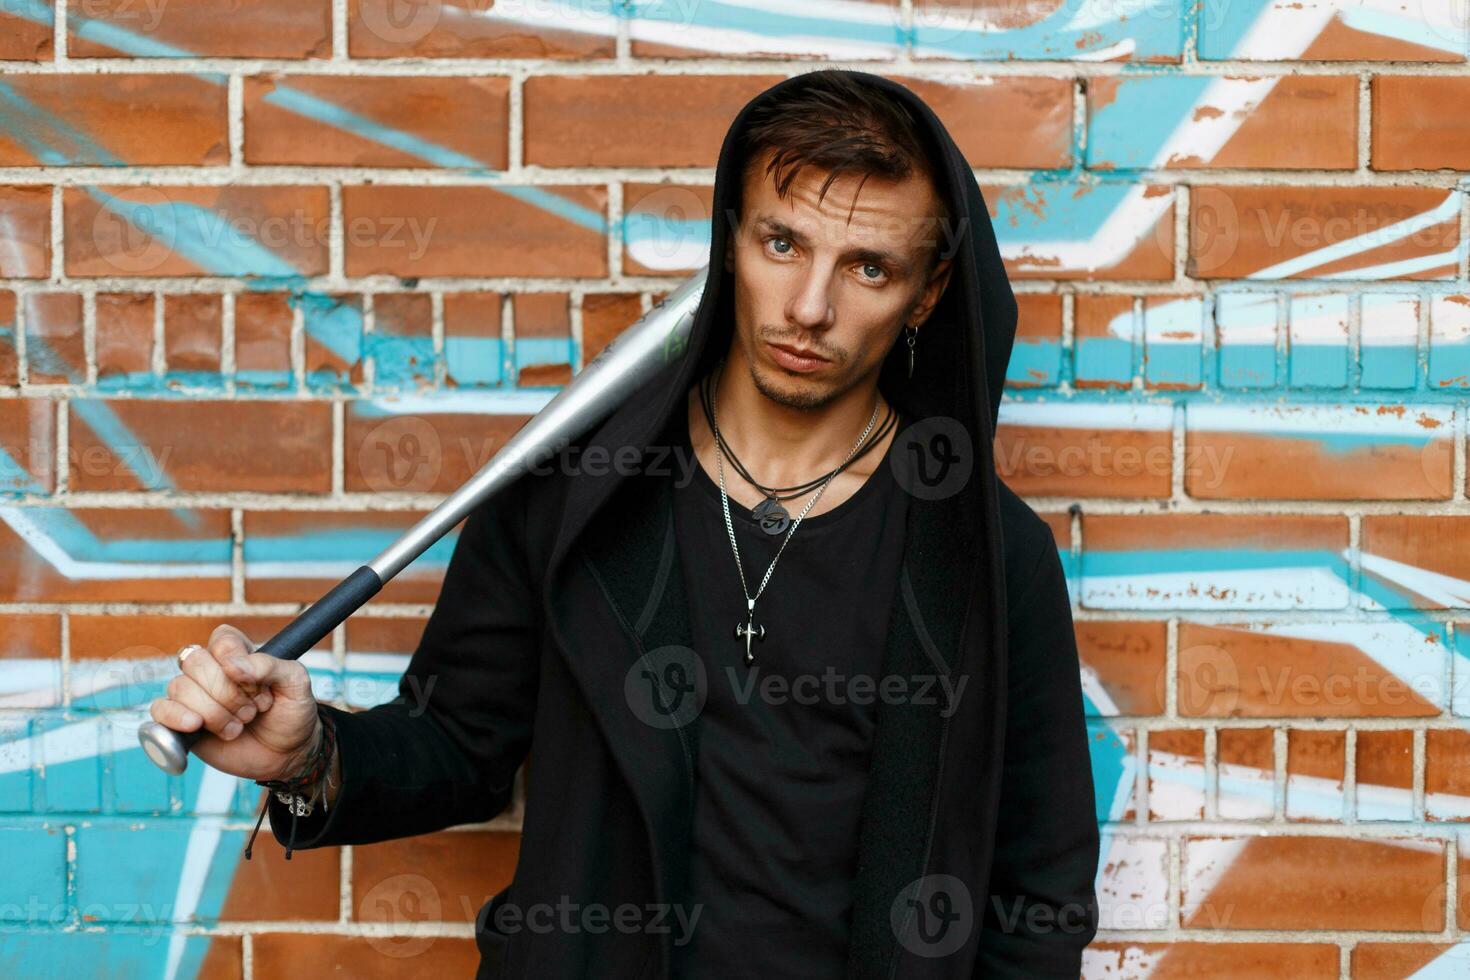 Angry guy near brick wall with graffiti holding a metal bat photo